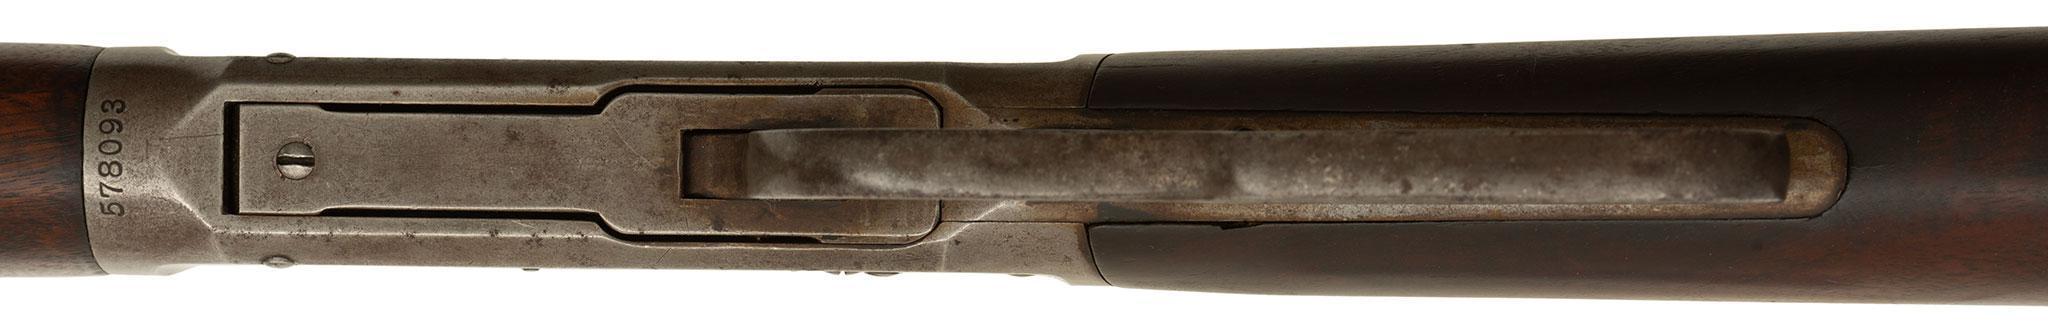 **Winchester Model 1894 Rifle